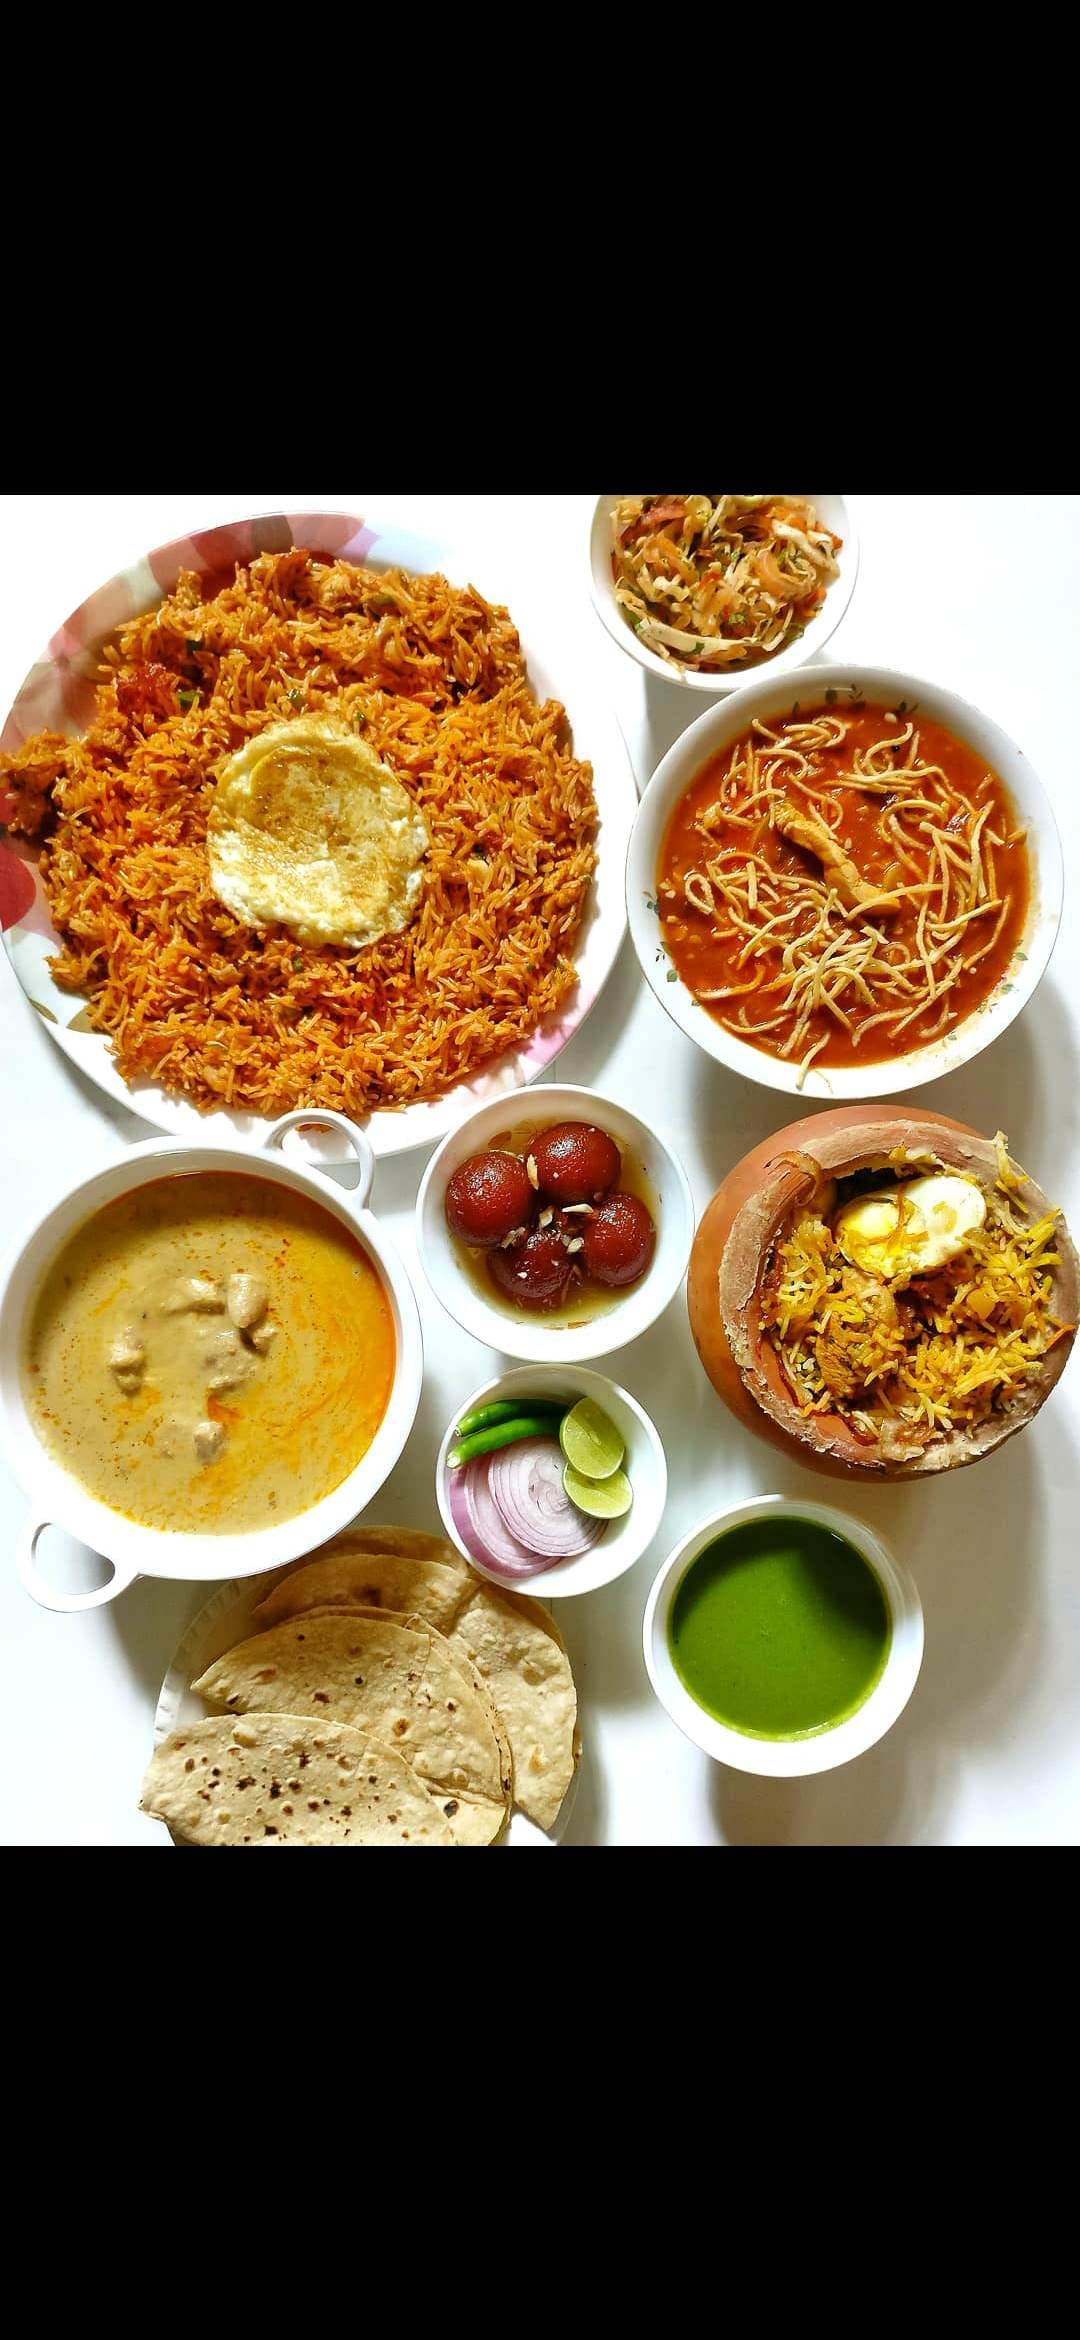 Dish,Food,Cuisine,Ingredient,Meal,Indian cuisine,Sindhi cuisine,Biryani,Produce,Recipe